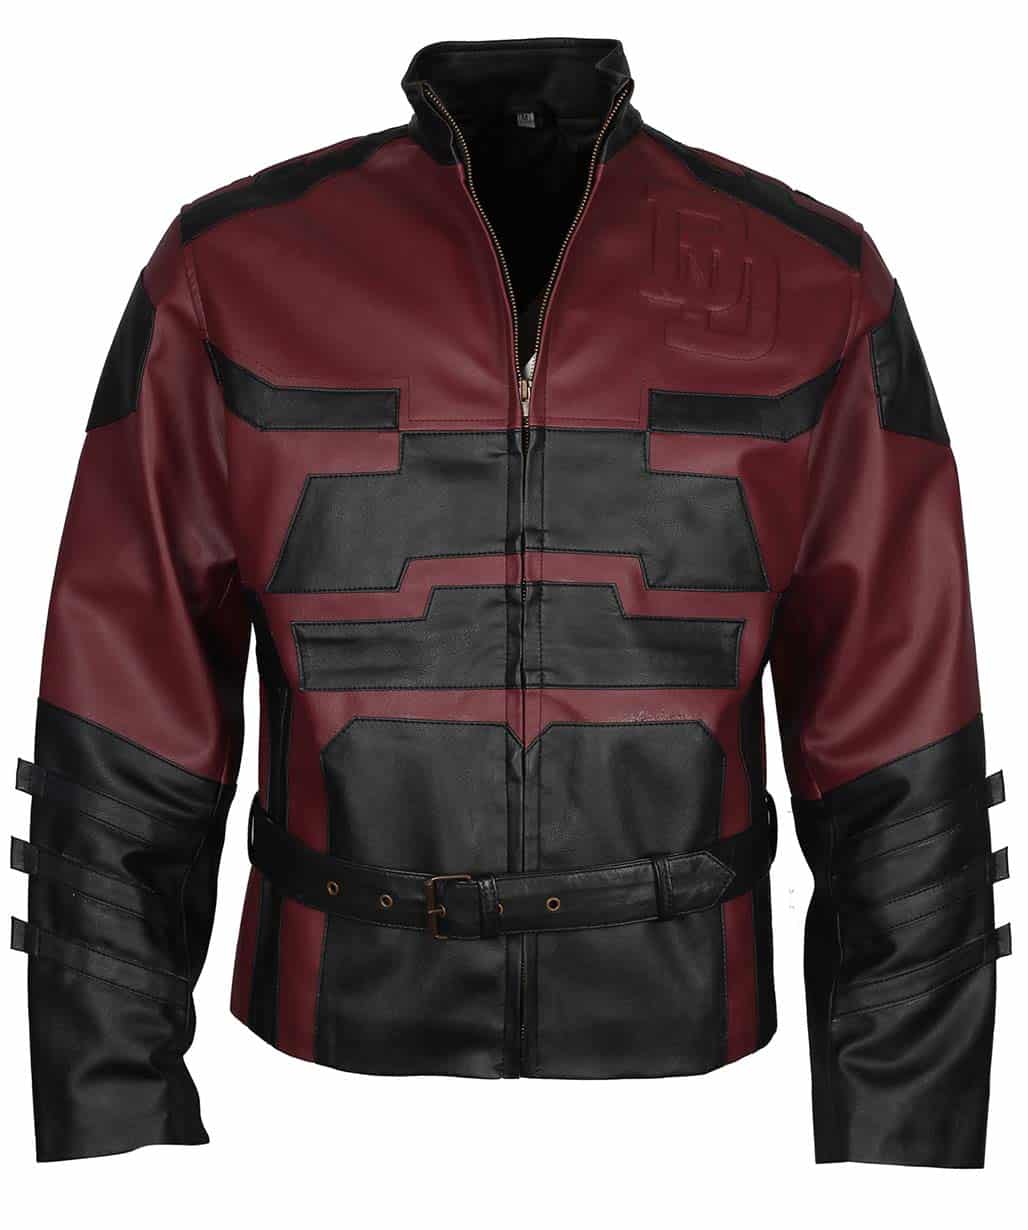 charlie-cox-daredevil-maroon-leather-jacket-costume